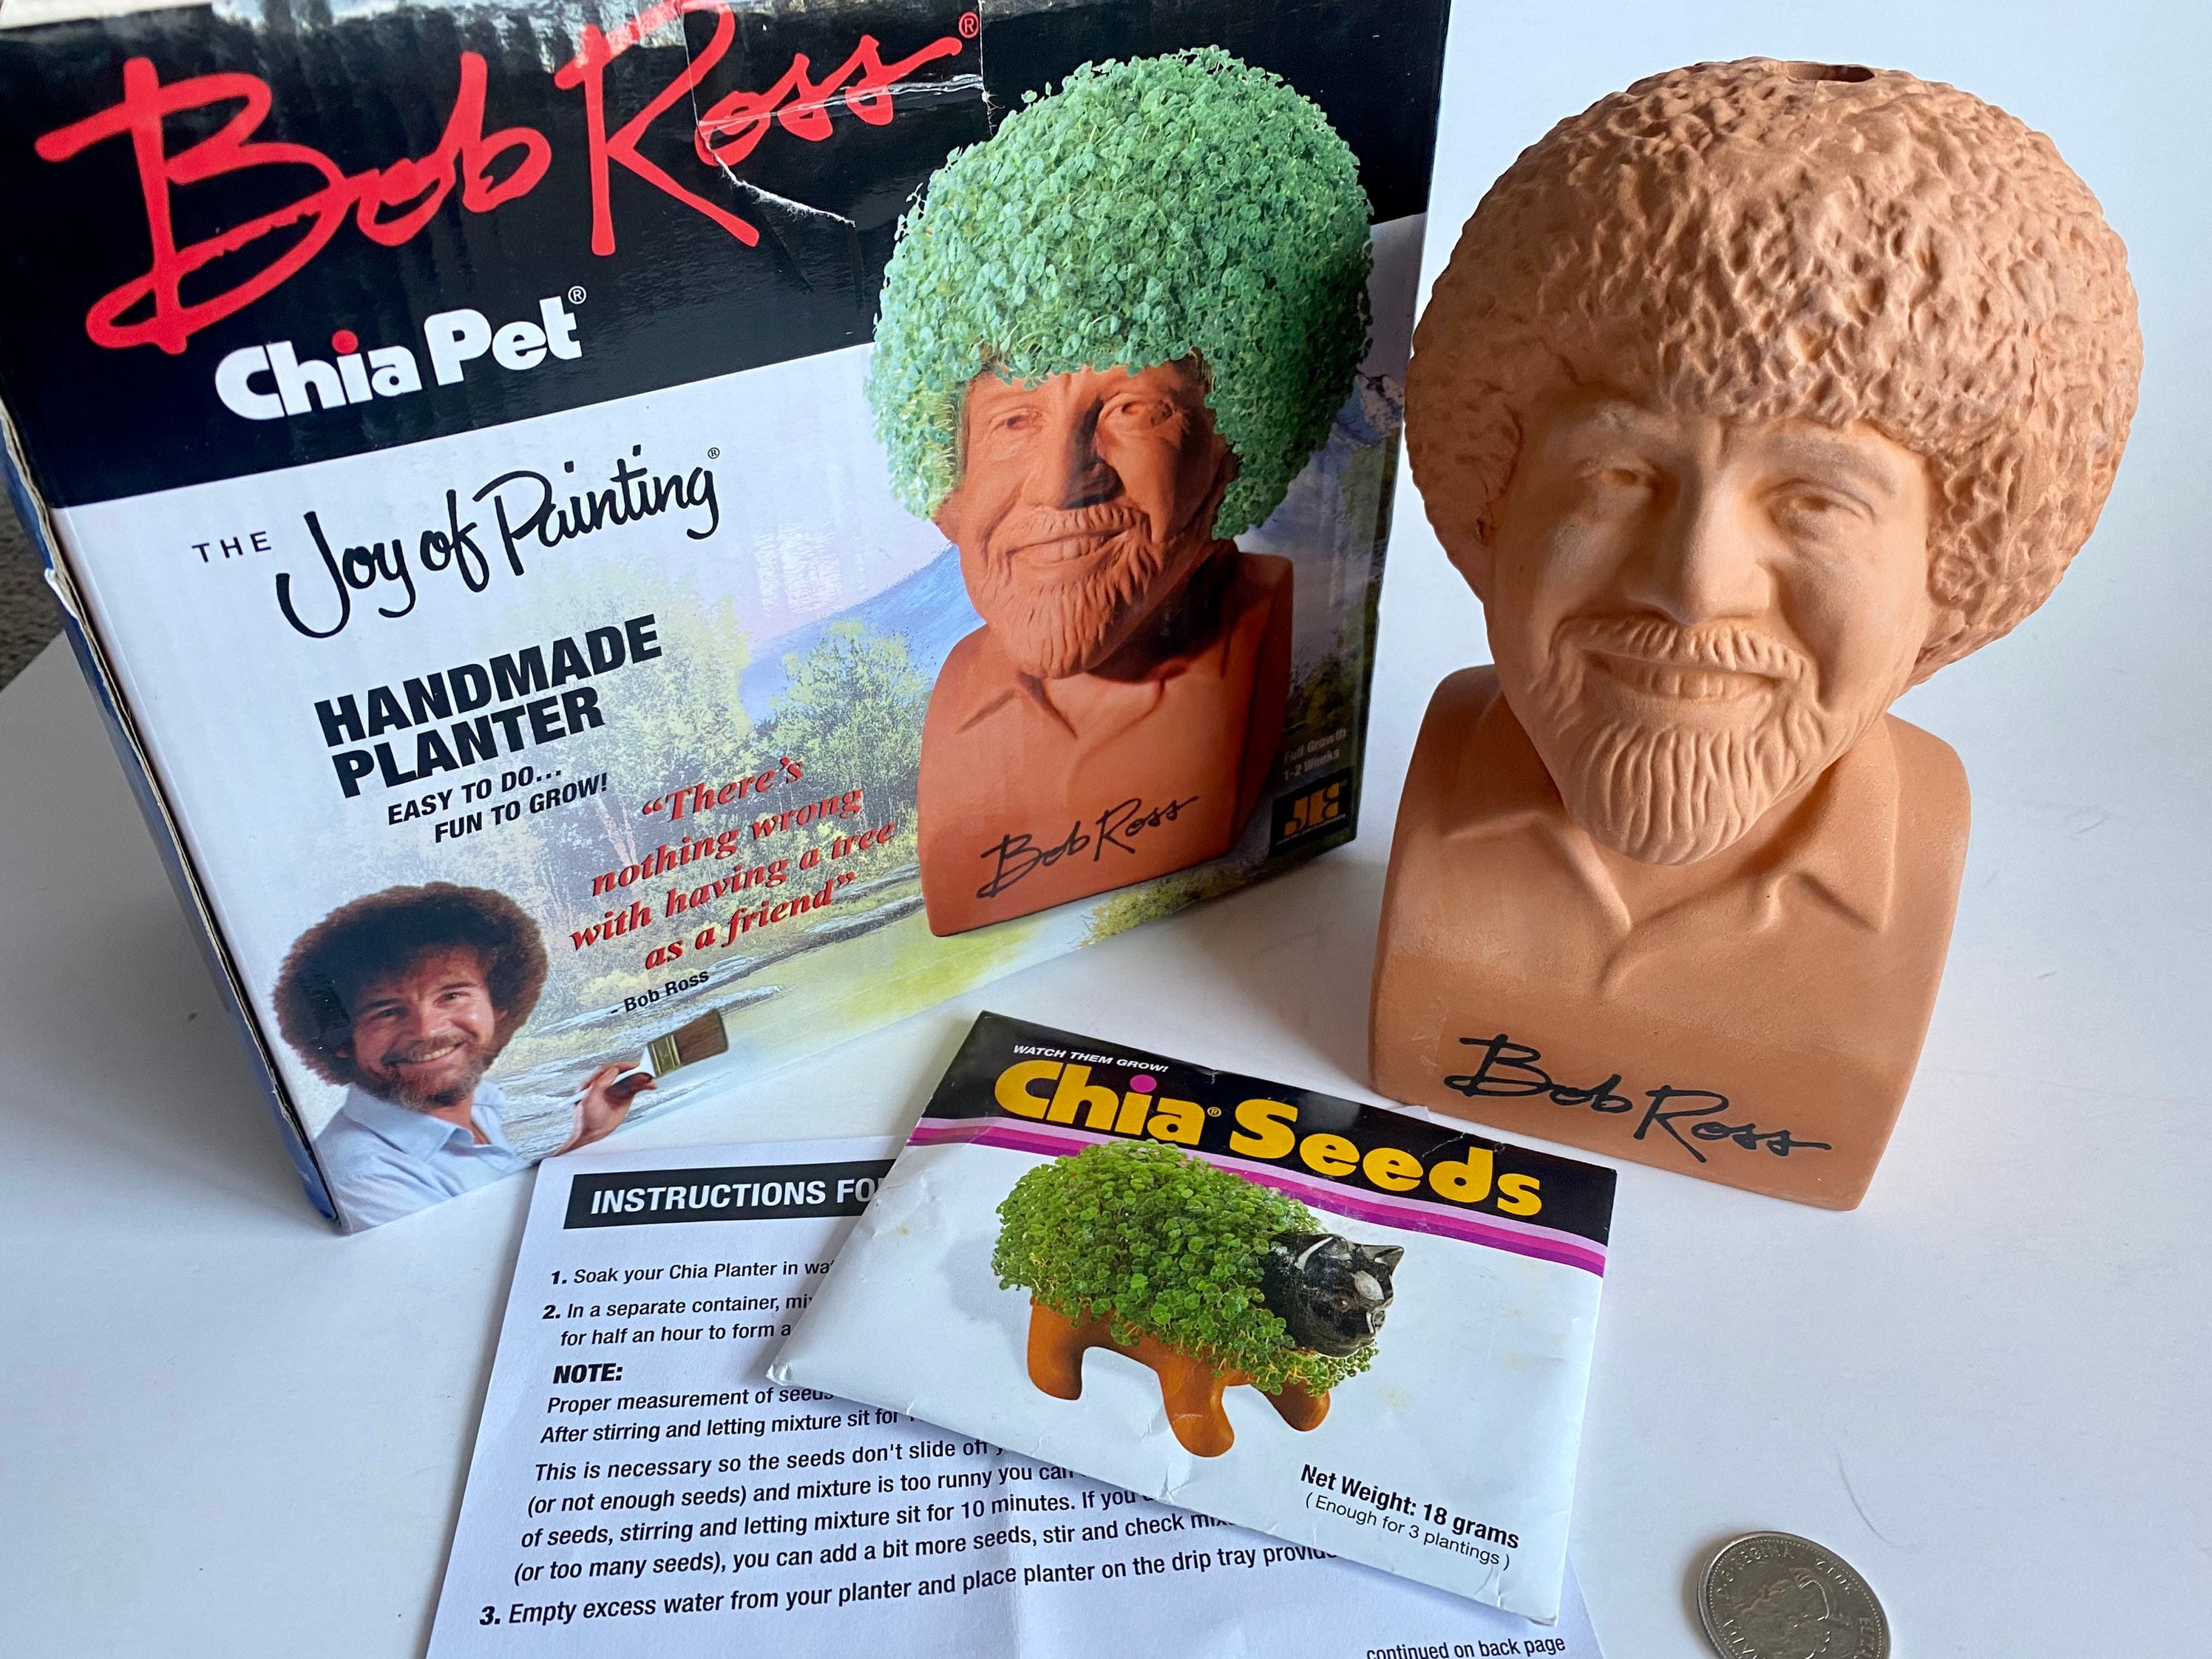 Bob Ross The Joy of Painting Chia Pet Handmade Planter New open box  21363004931